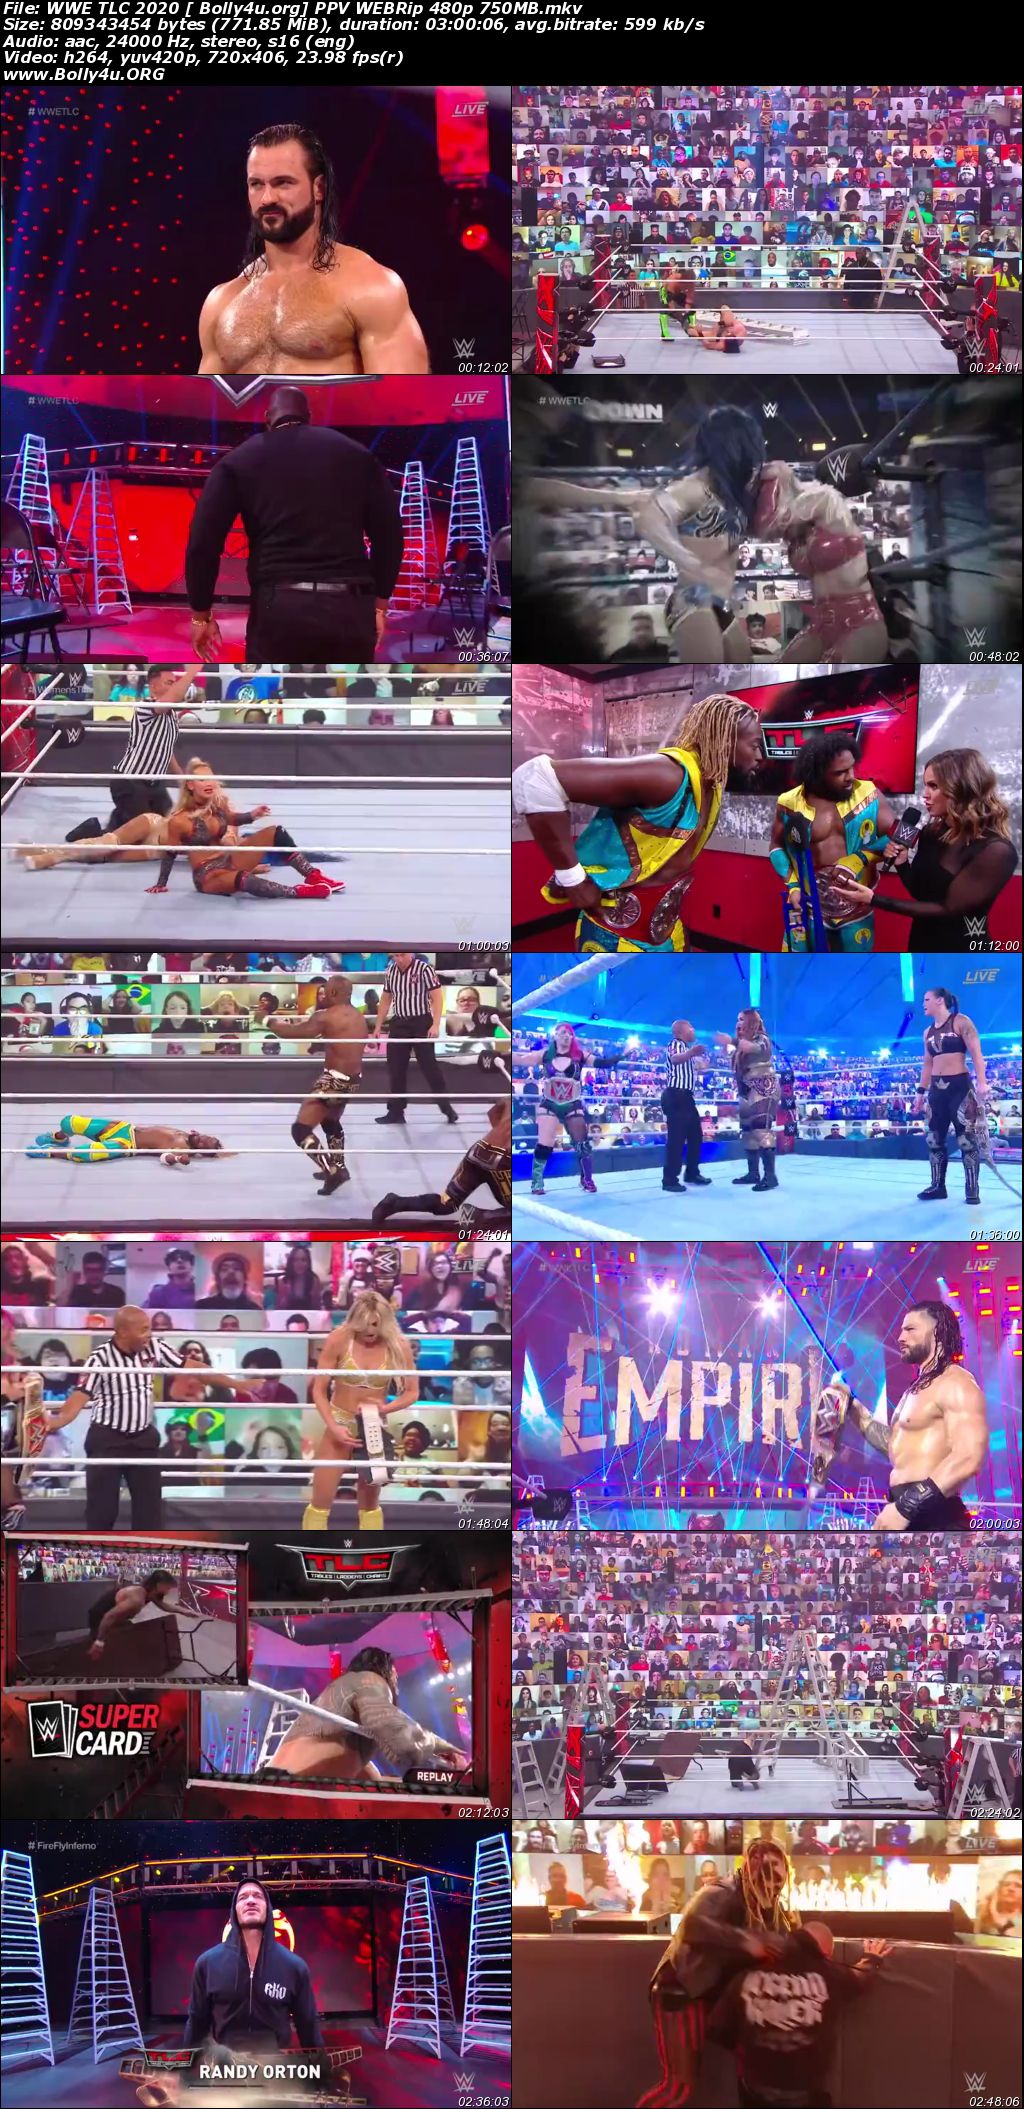 WWE TLC 2020 WEBRip 750MB PPV 480p Download